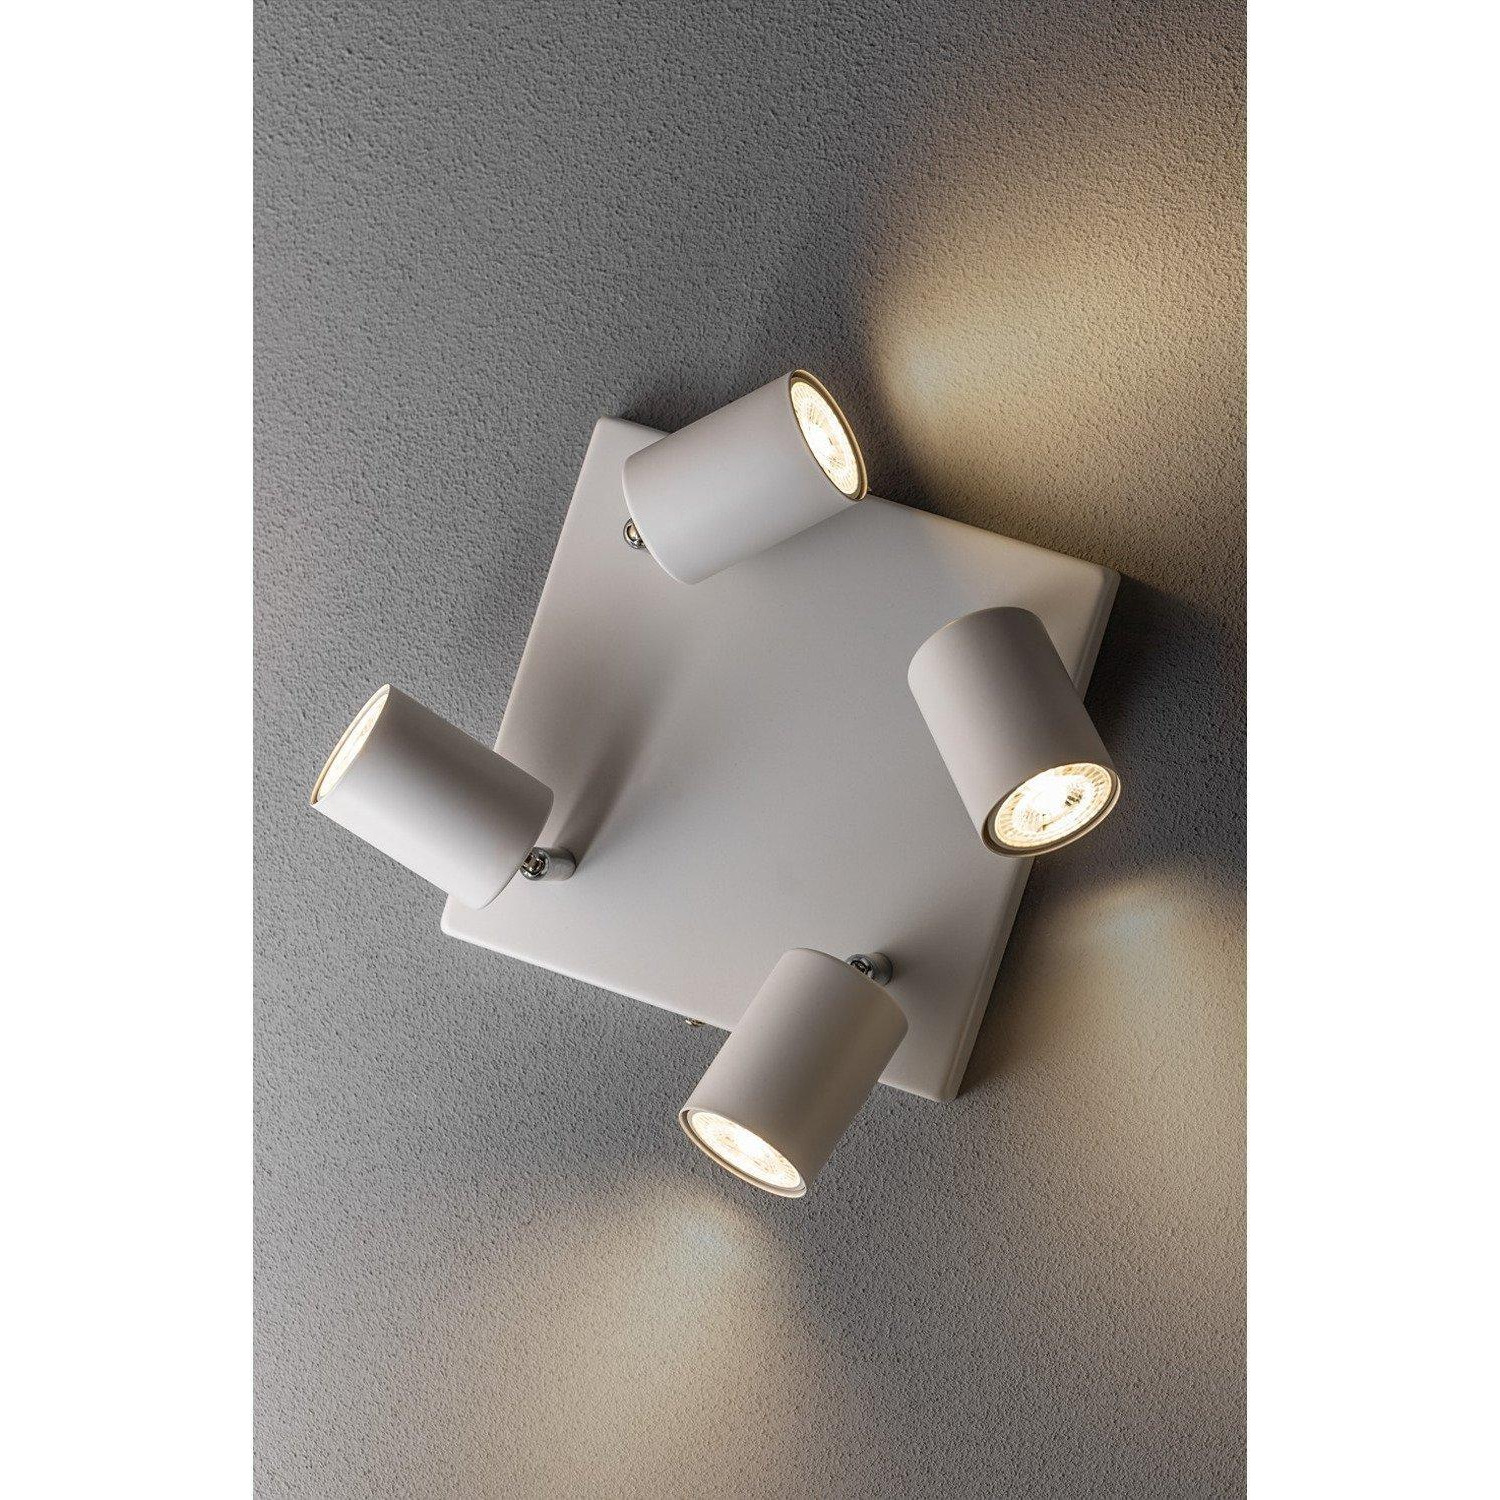 'Jack' Square White Four Head GU10 Ceiling Spot Light - image 1